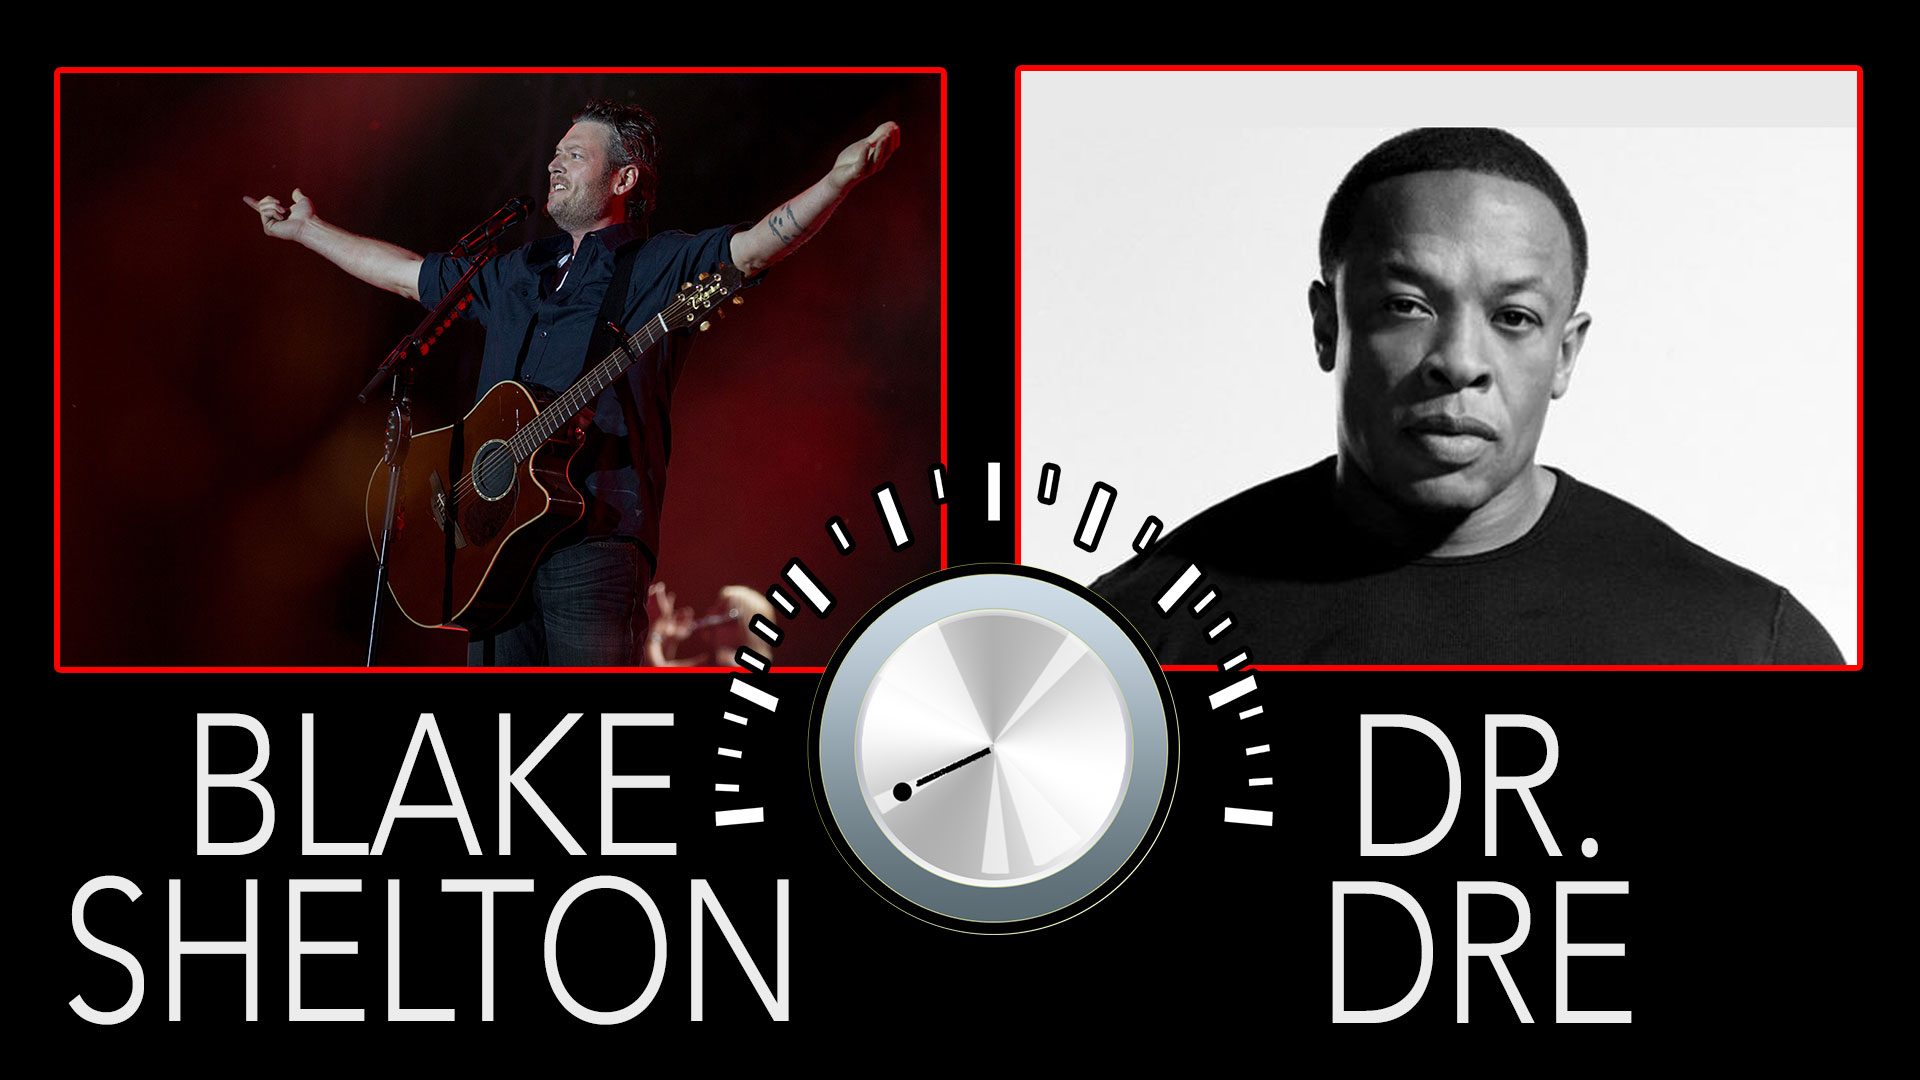 6 Degrees Of Music Collaboration: Blake Shelton To Dr. Dre - GRAMMY Awards Photos ...